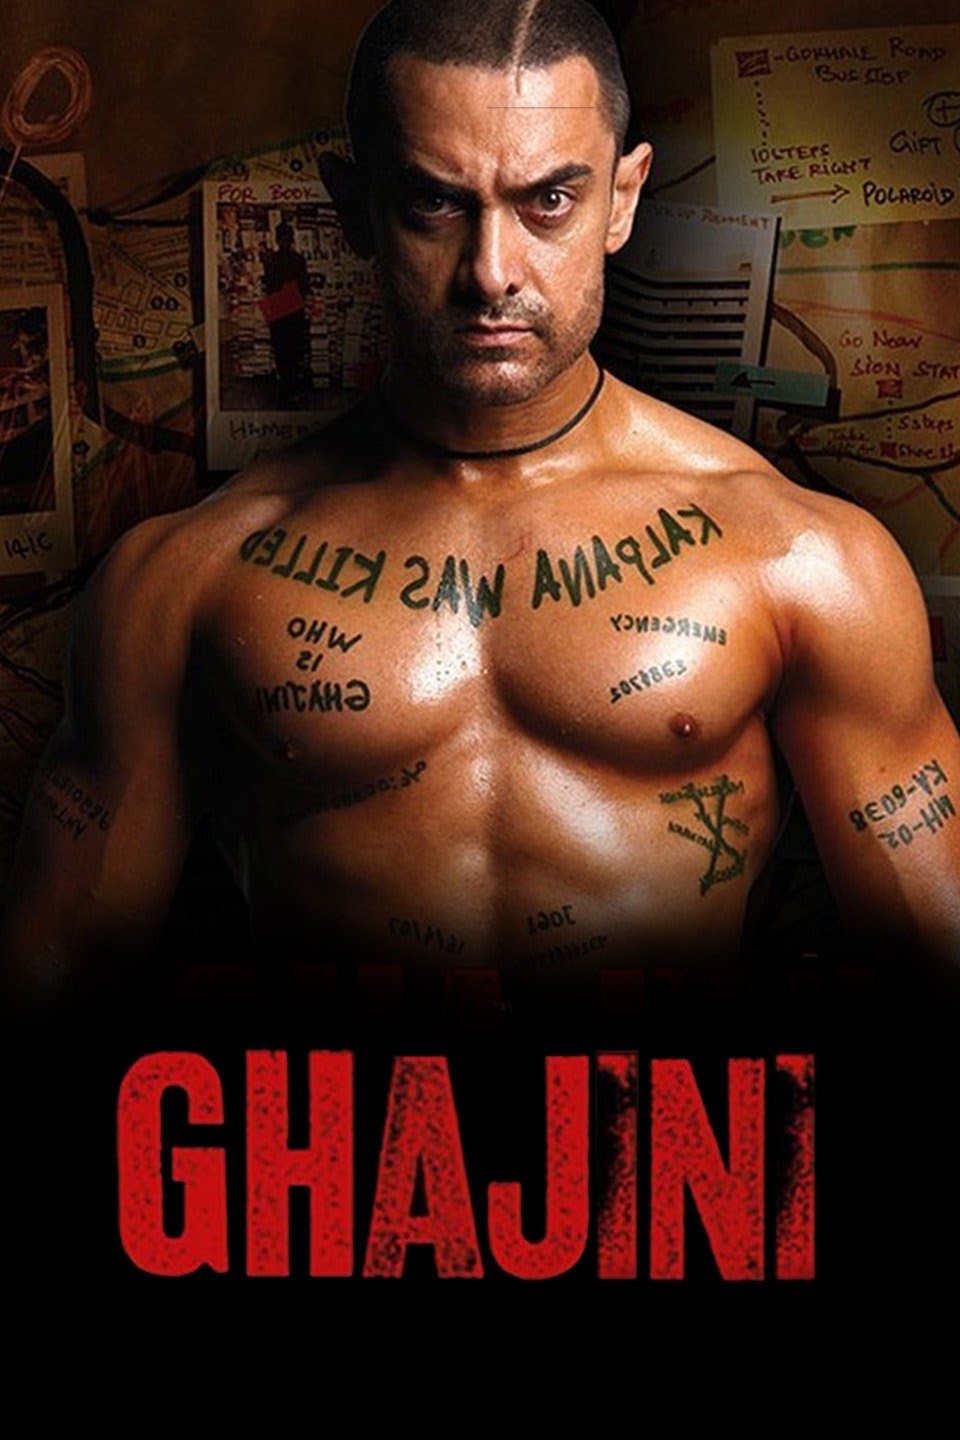 Ghajini (2008)